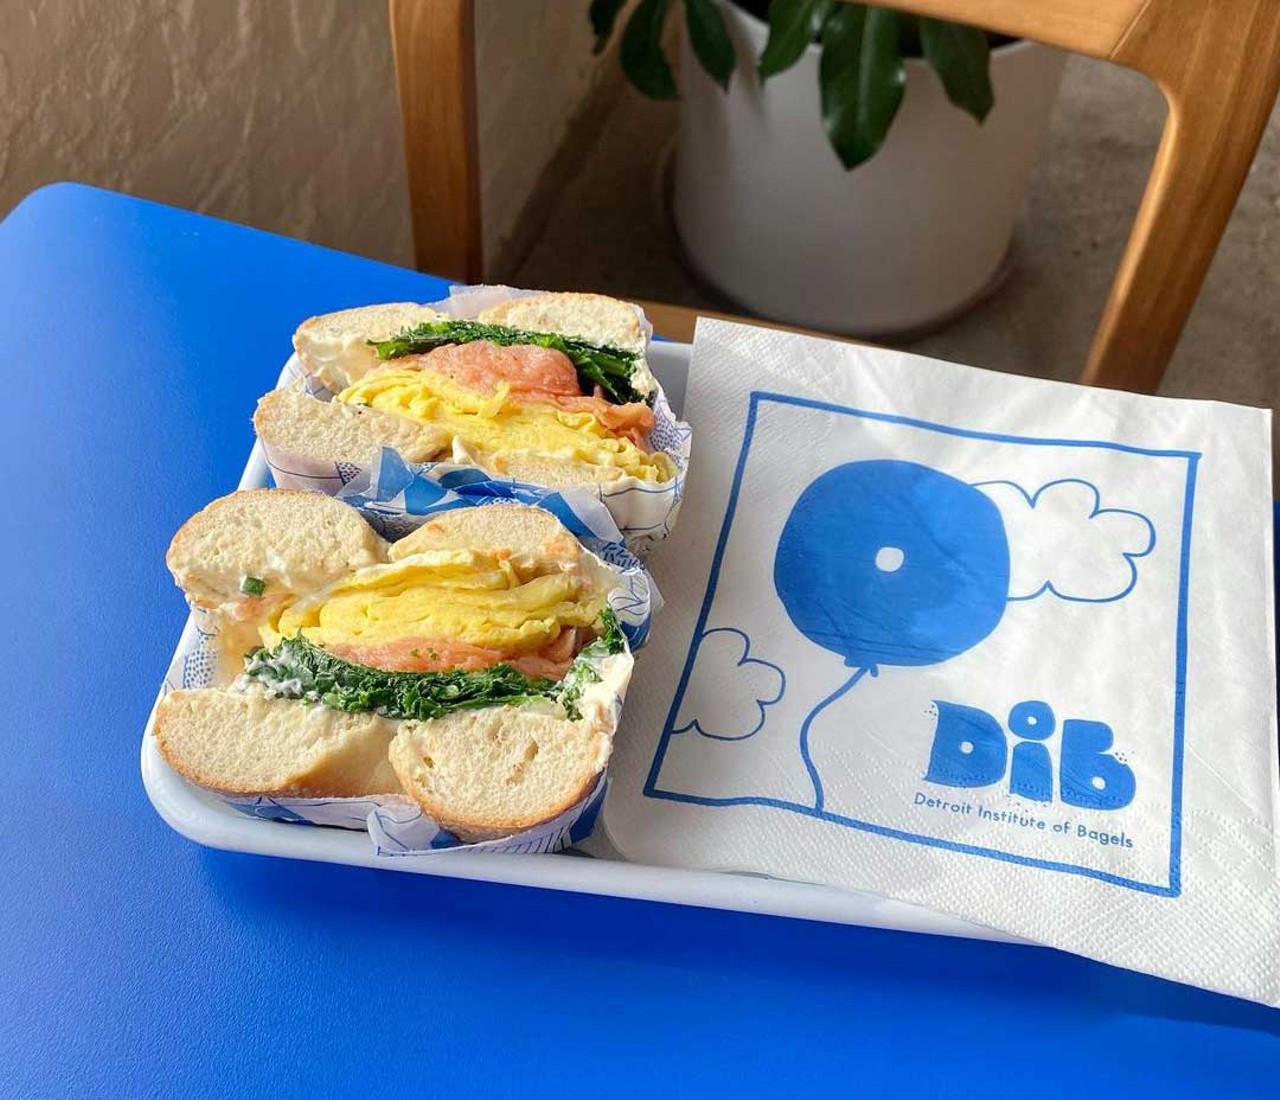 Best Breakfast Sandwich: Detroit Institute of Bagels
4884 Grand River Ave., Detroit; 313-512-8292; detroitinstituteofbagels.com